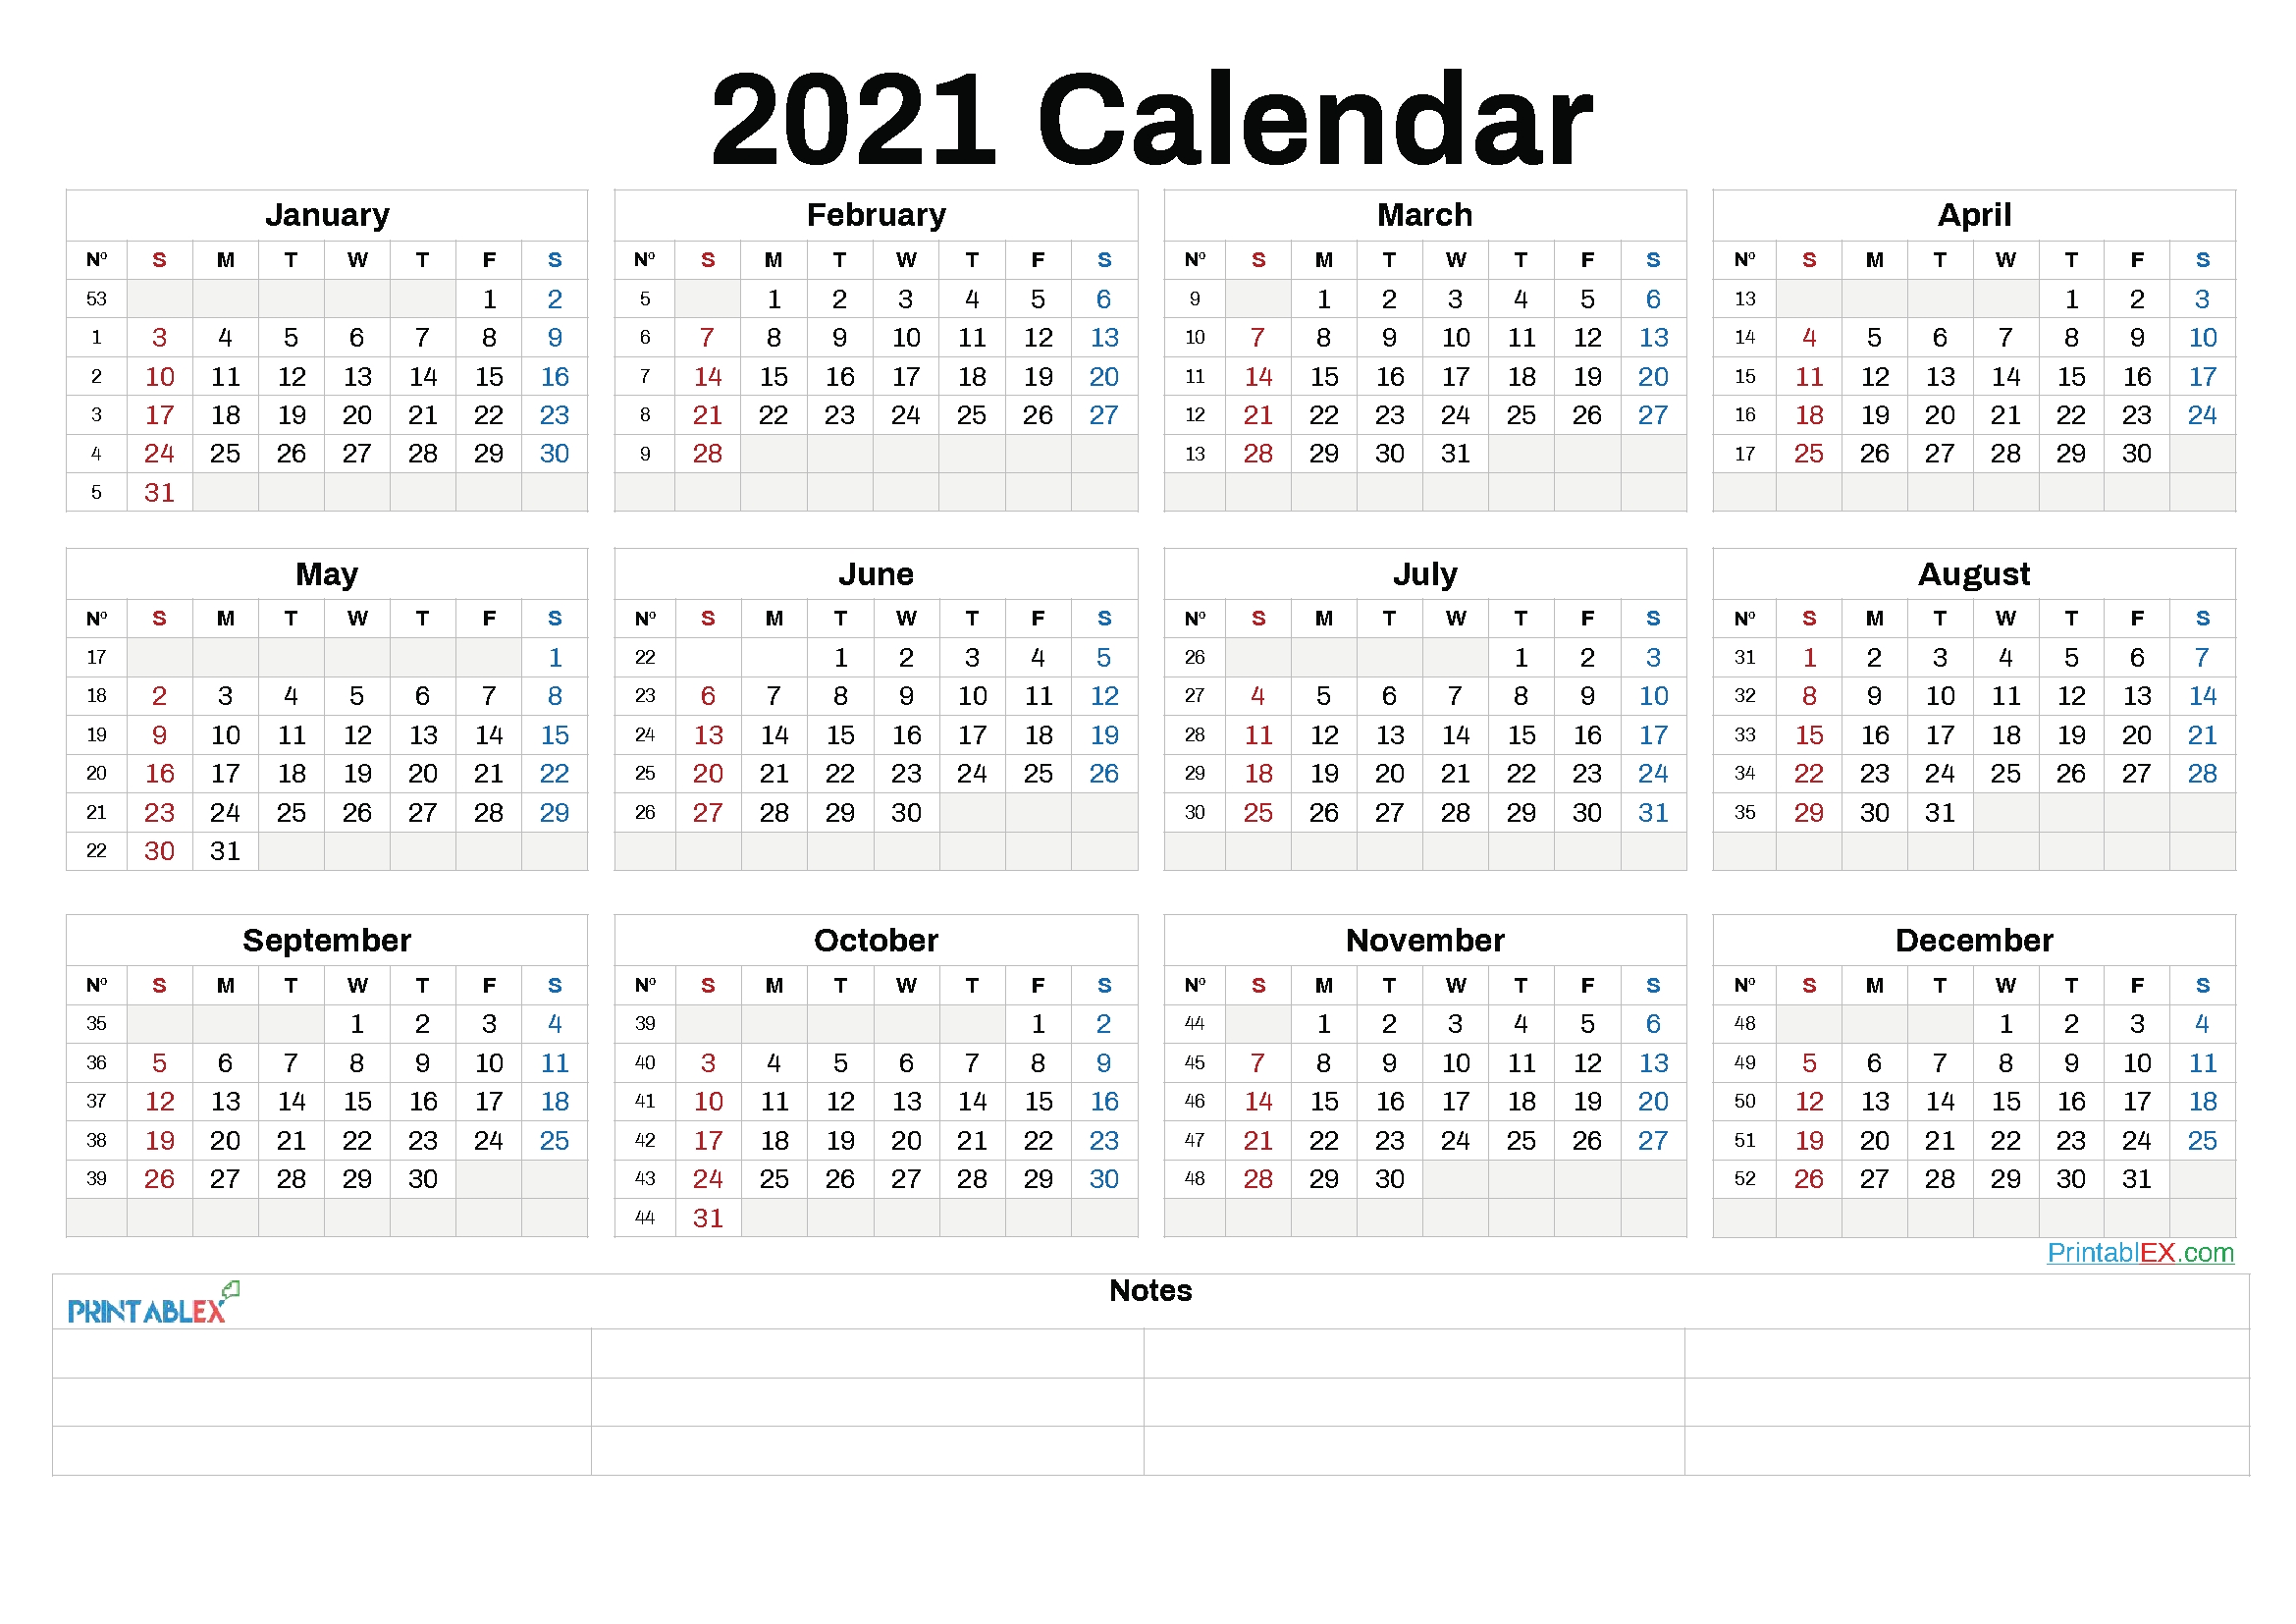 2021 Annual Calendar Printable | 2021 Printable Calendars